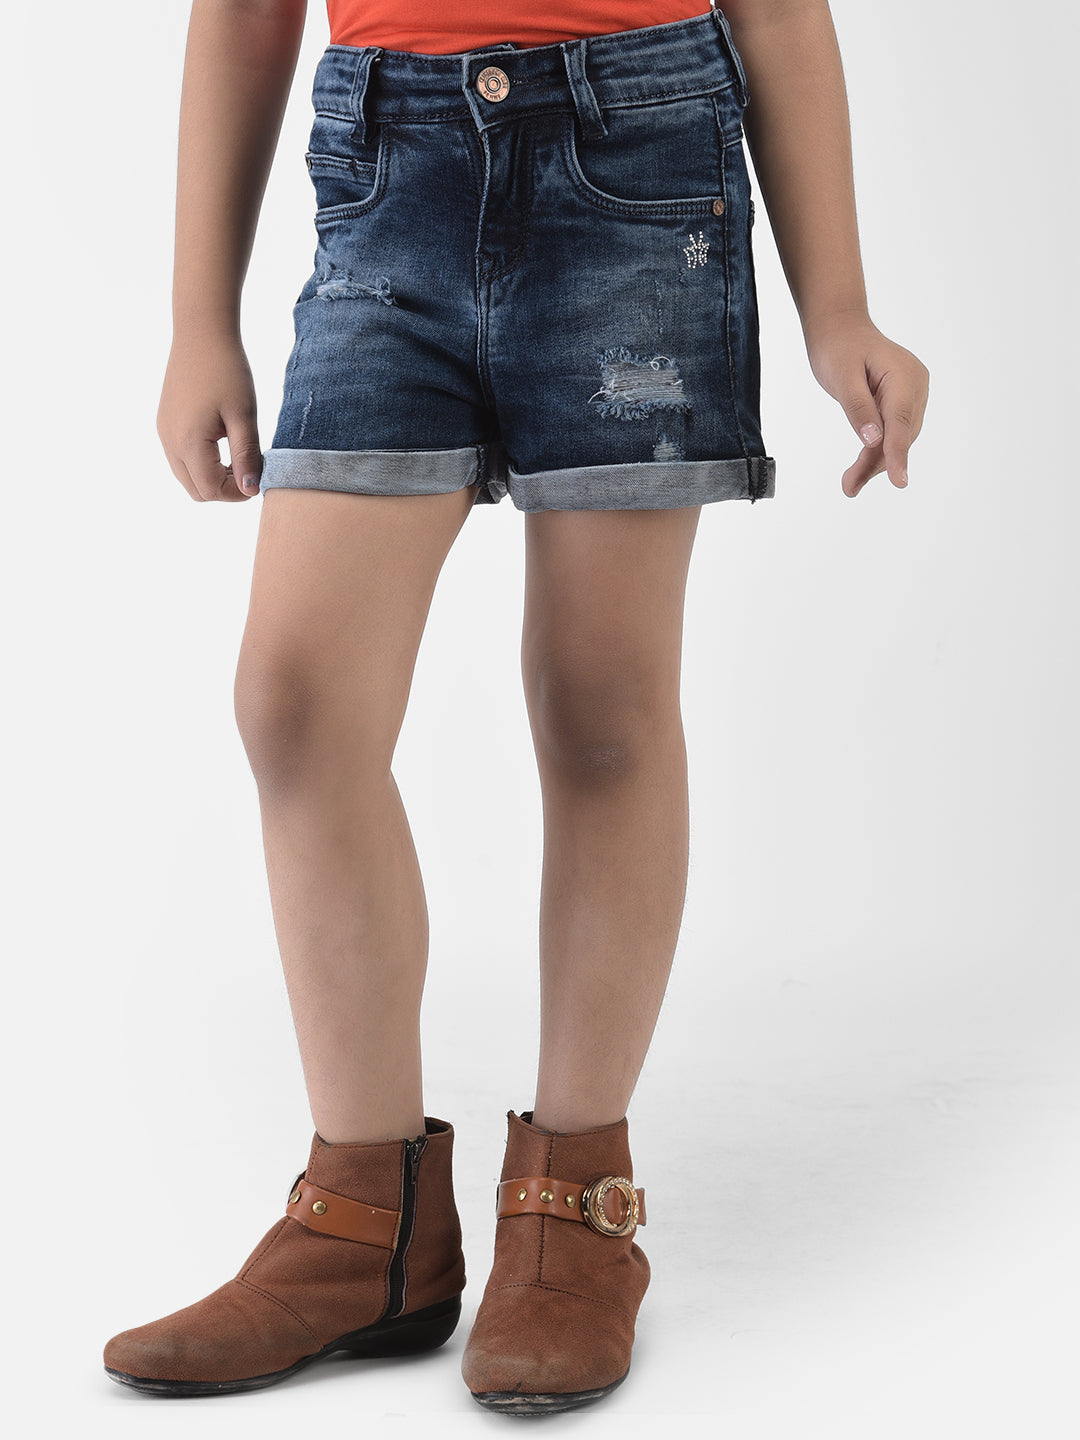 Blue Distressed Shorts - Girls Shorts